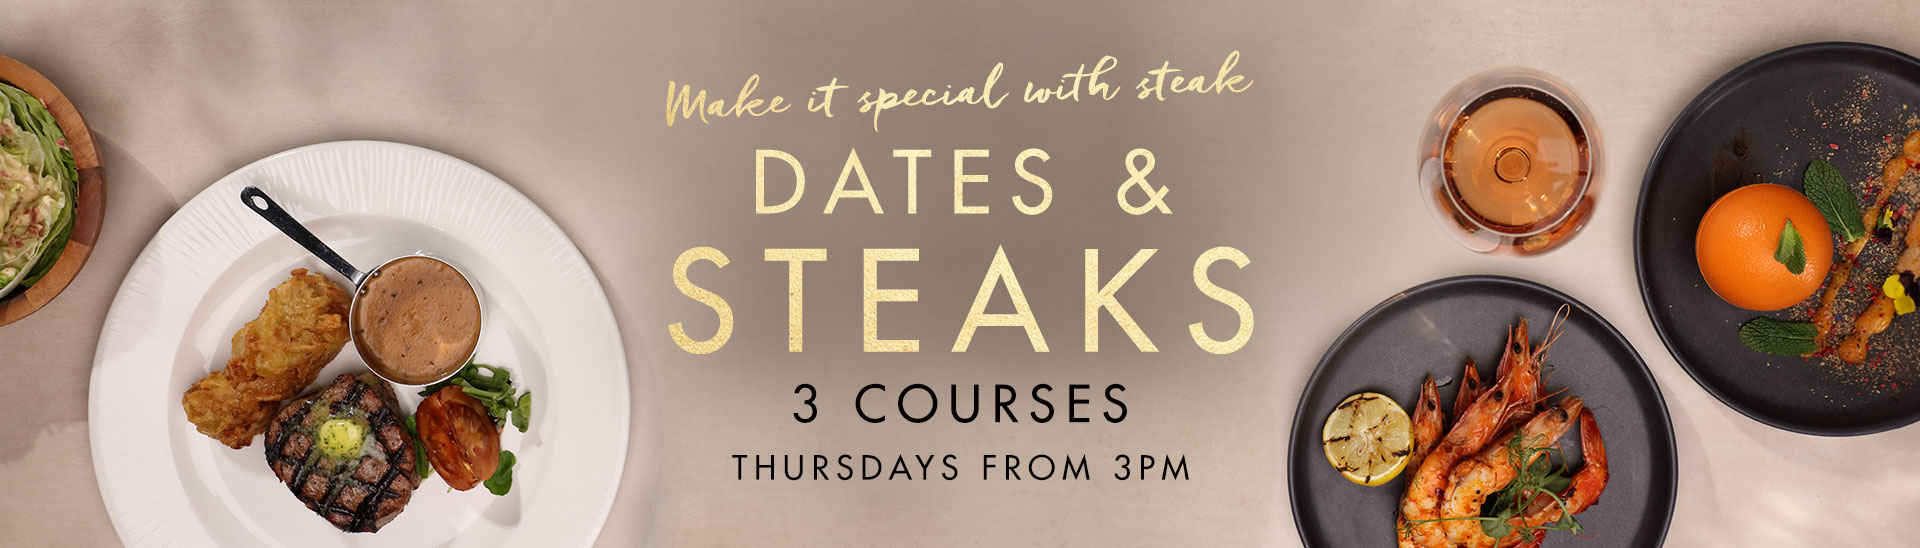 Dates & Steaks at M&C Virtual